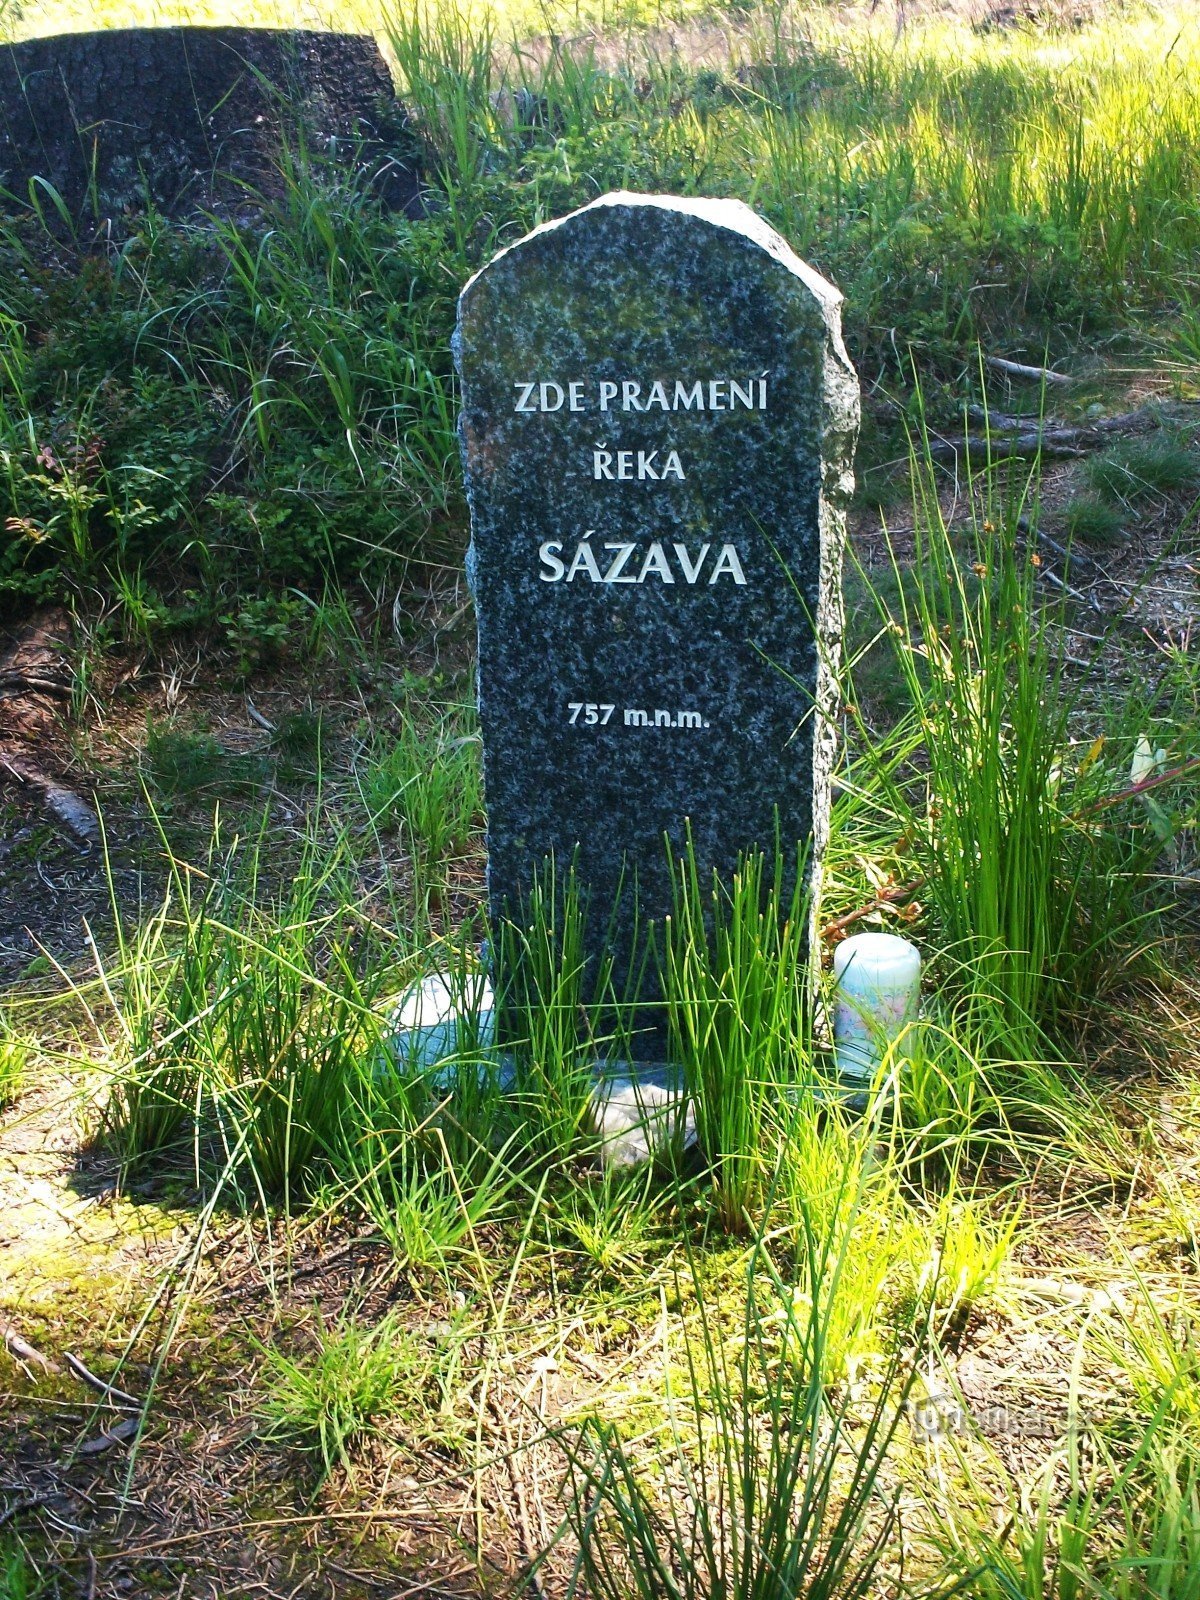 Sázava春天的名称